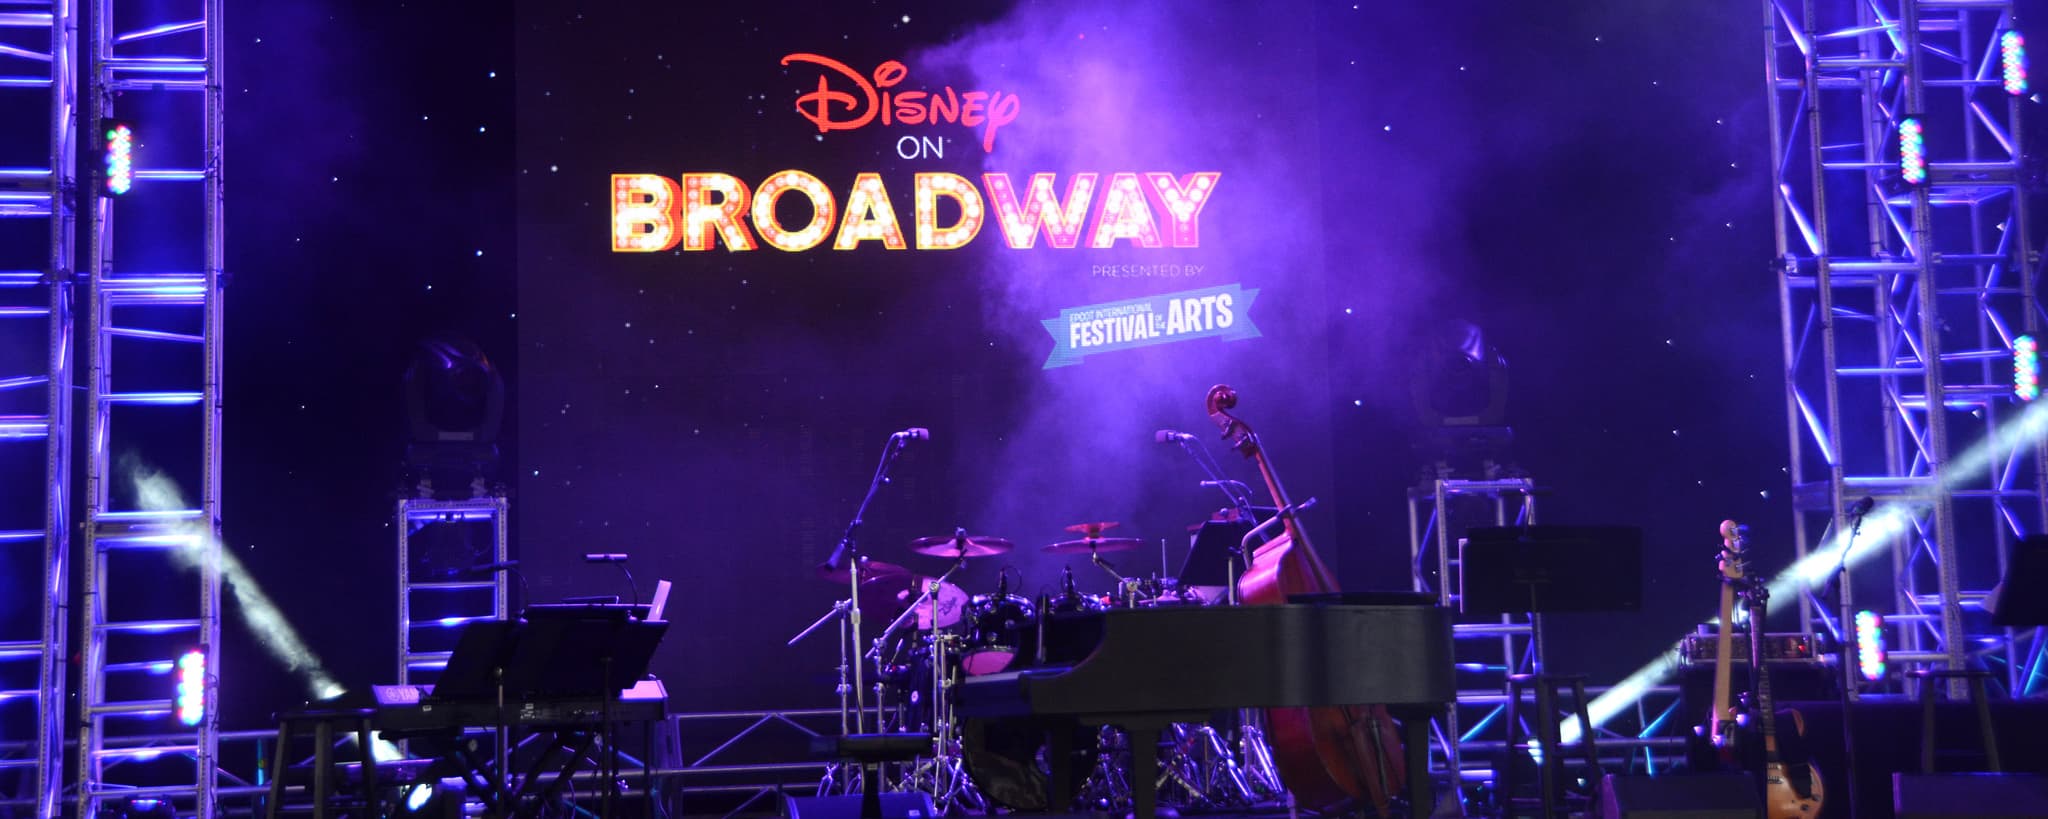 Epcot International Festival of the Arts - Disney on Broadway Concert Series